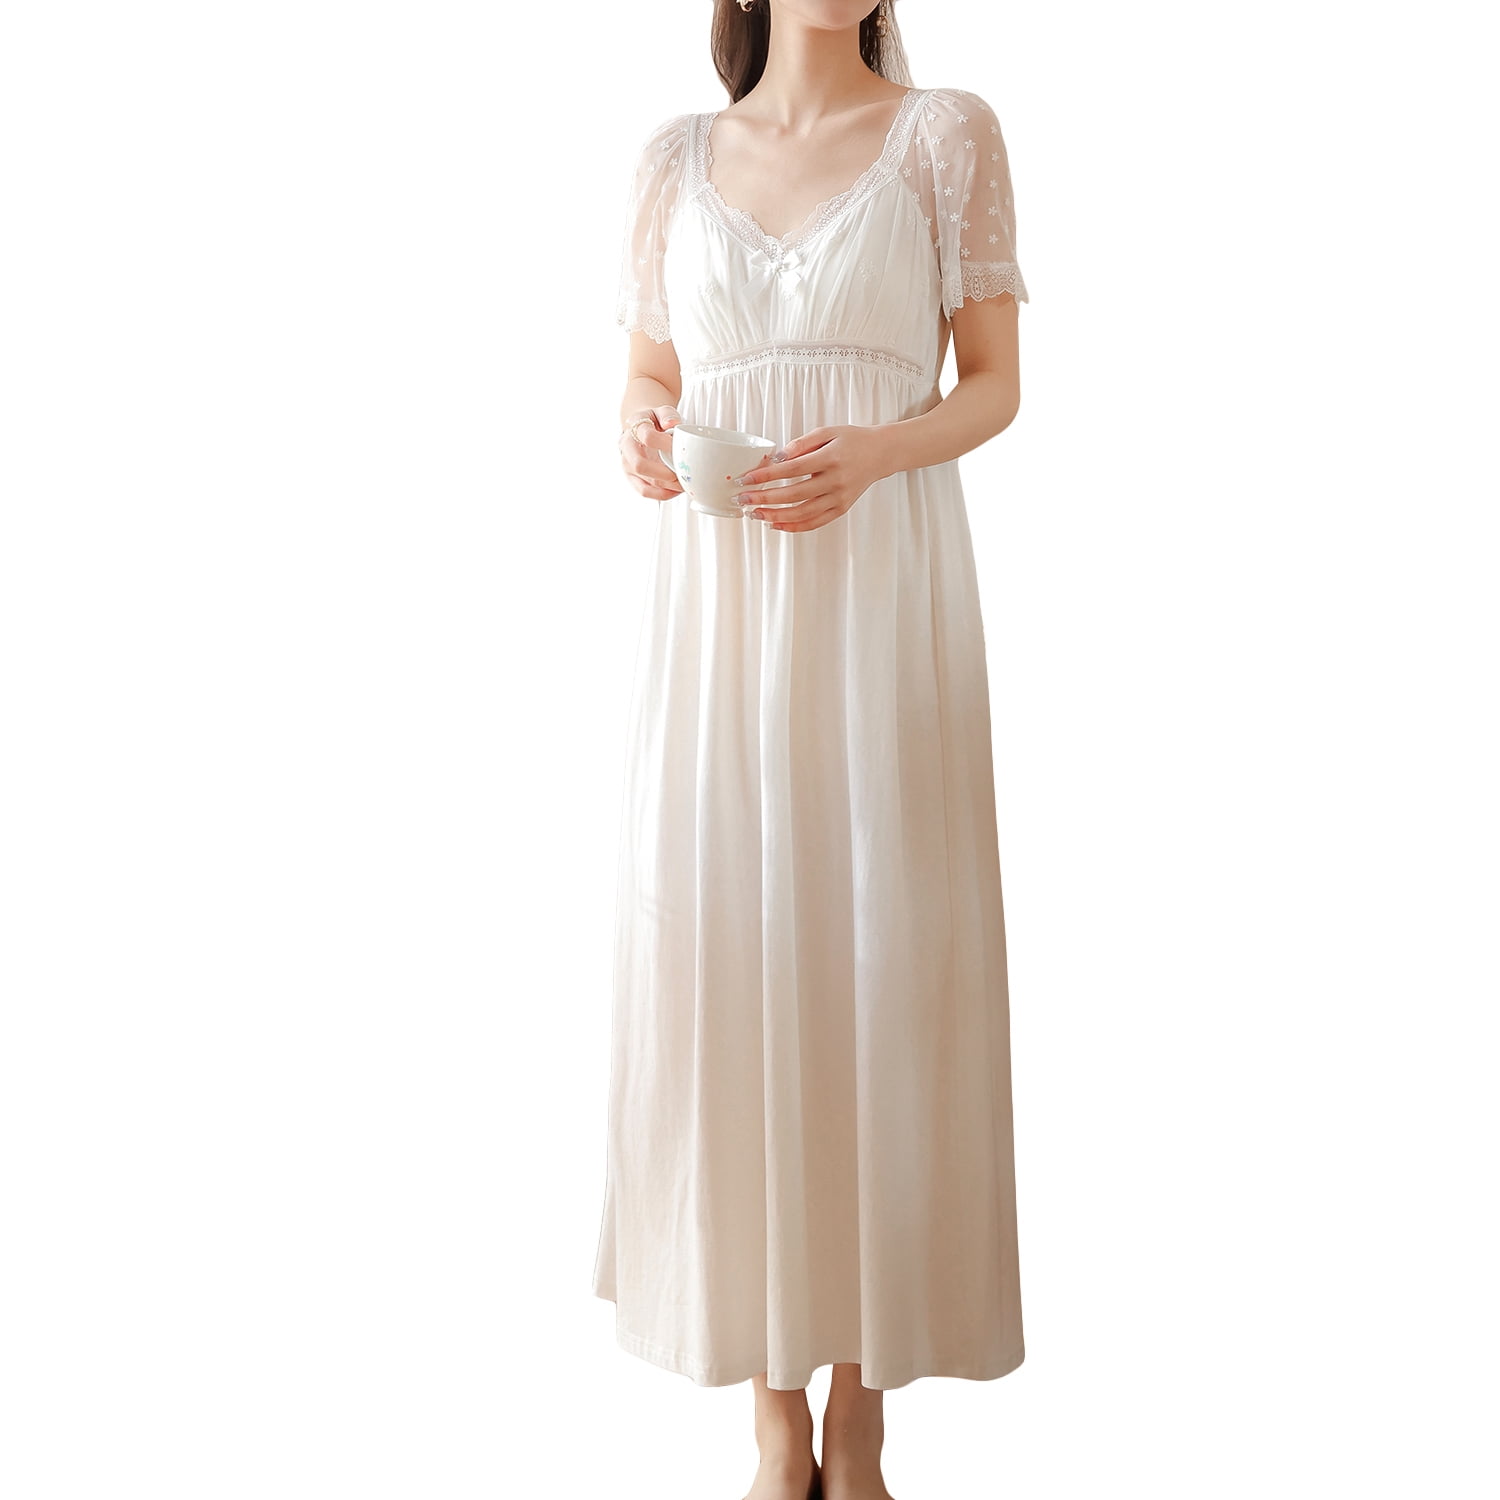 Homgro Women's Cotton Victorian Nightgown Ladies Soft Midi Short